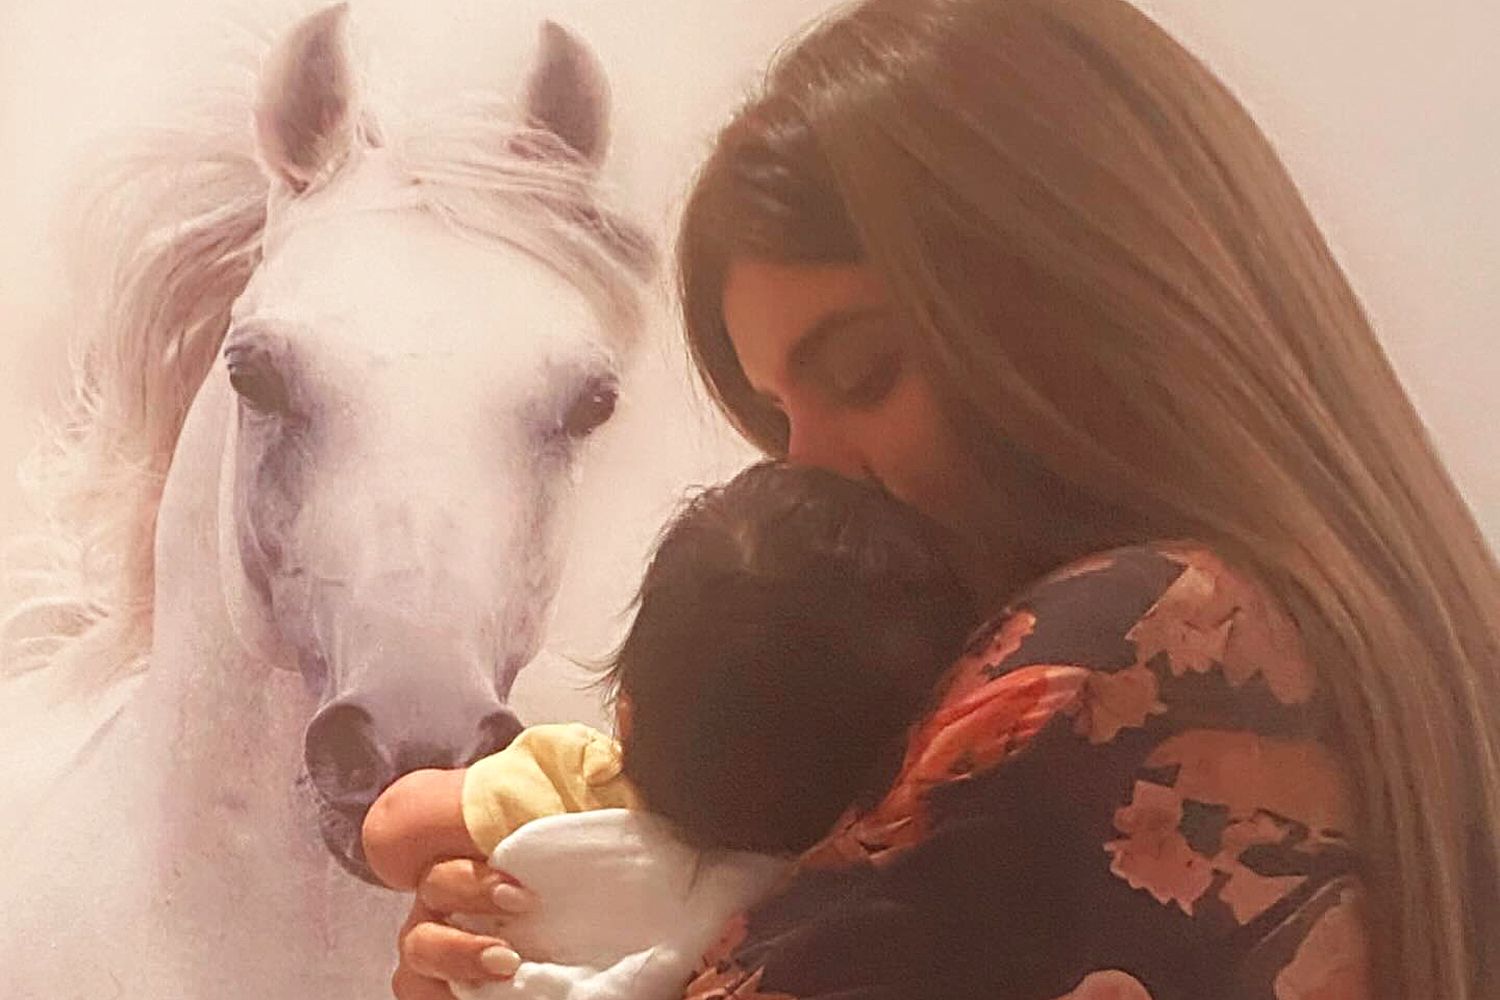 Dubai Princess Posts New Photo After Declaring Divorce on Instagram [Video]